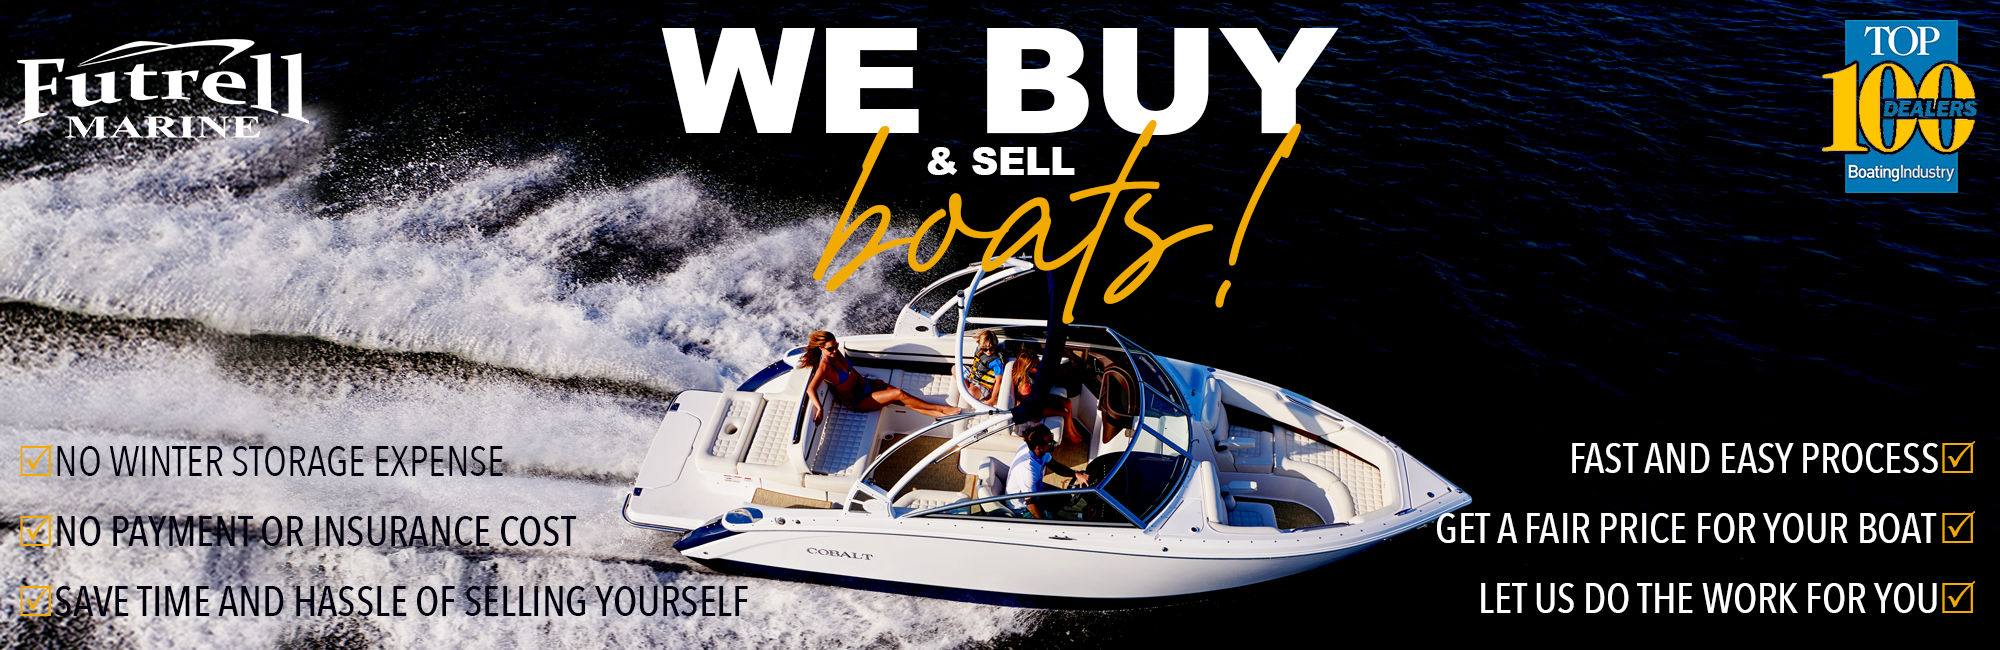 We Buy And Sell Boats Rotator